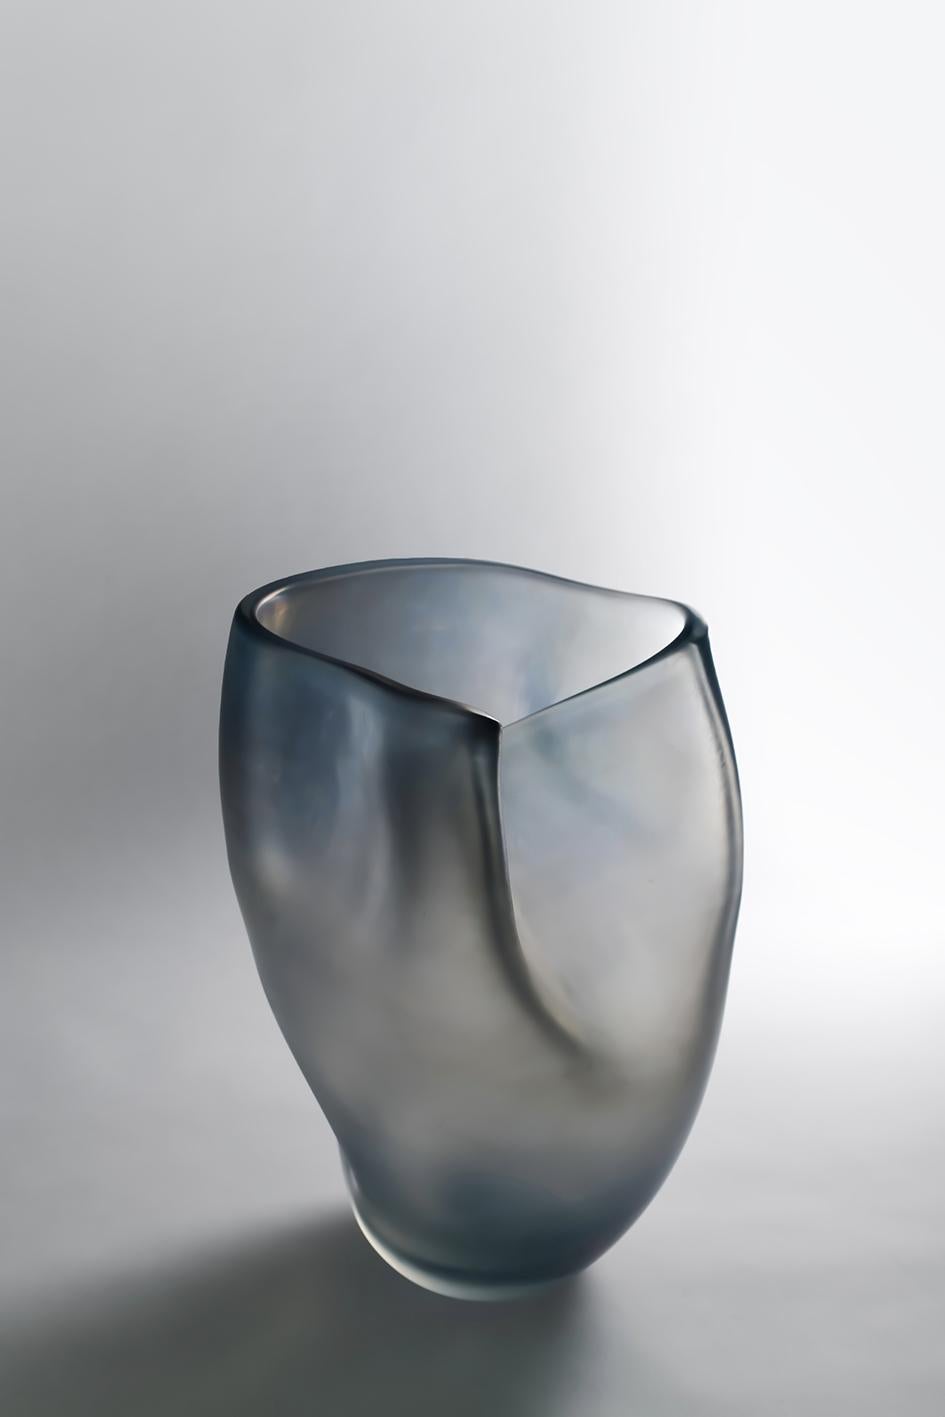 Italian 21st Century Ludovica+Roberto Palomba Laguna Bacan Vase Murano Glass Steel Grey For Sale